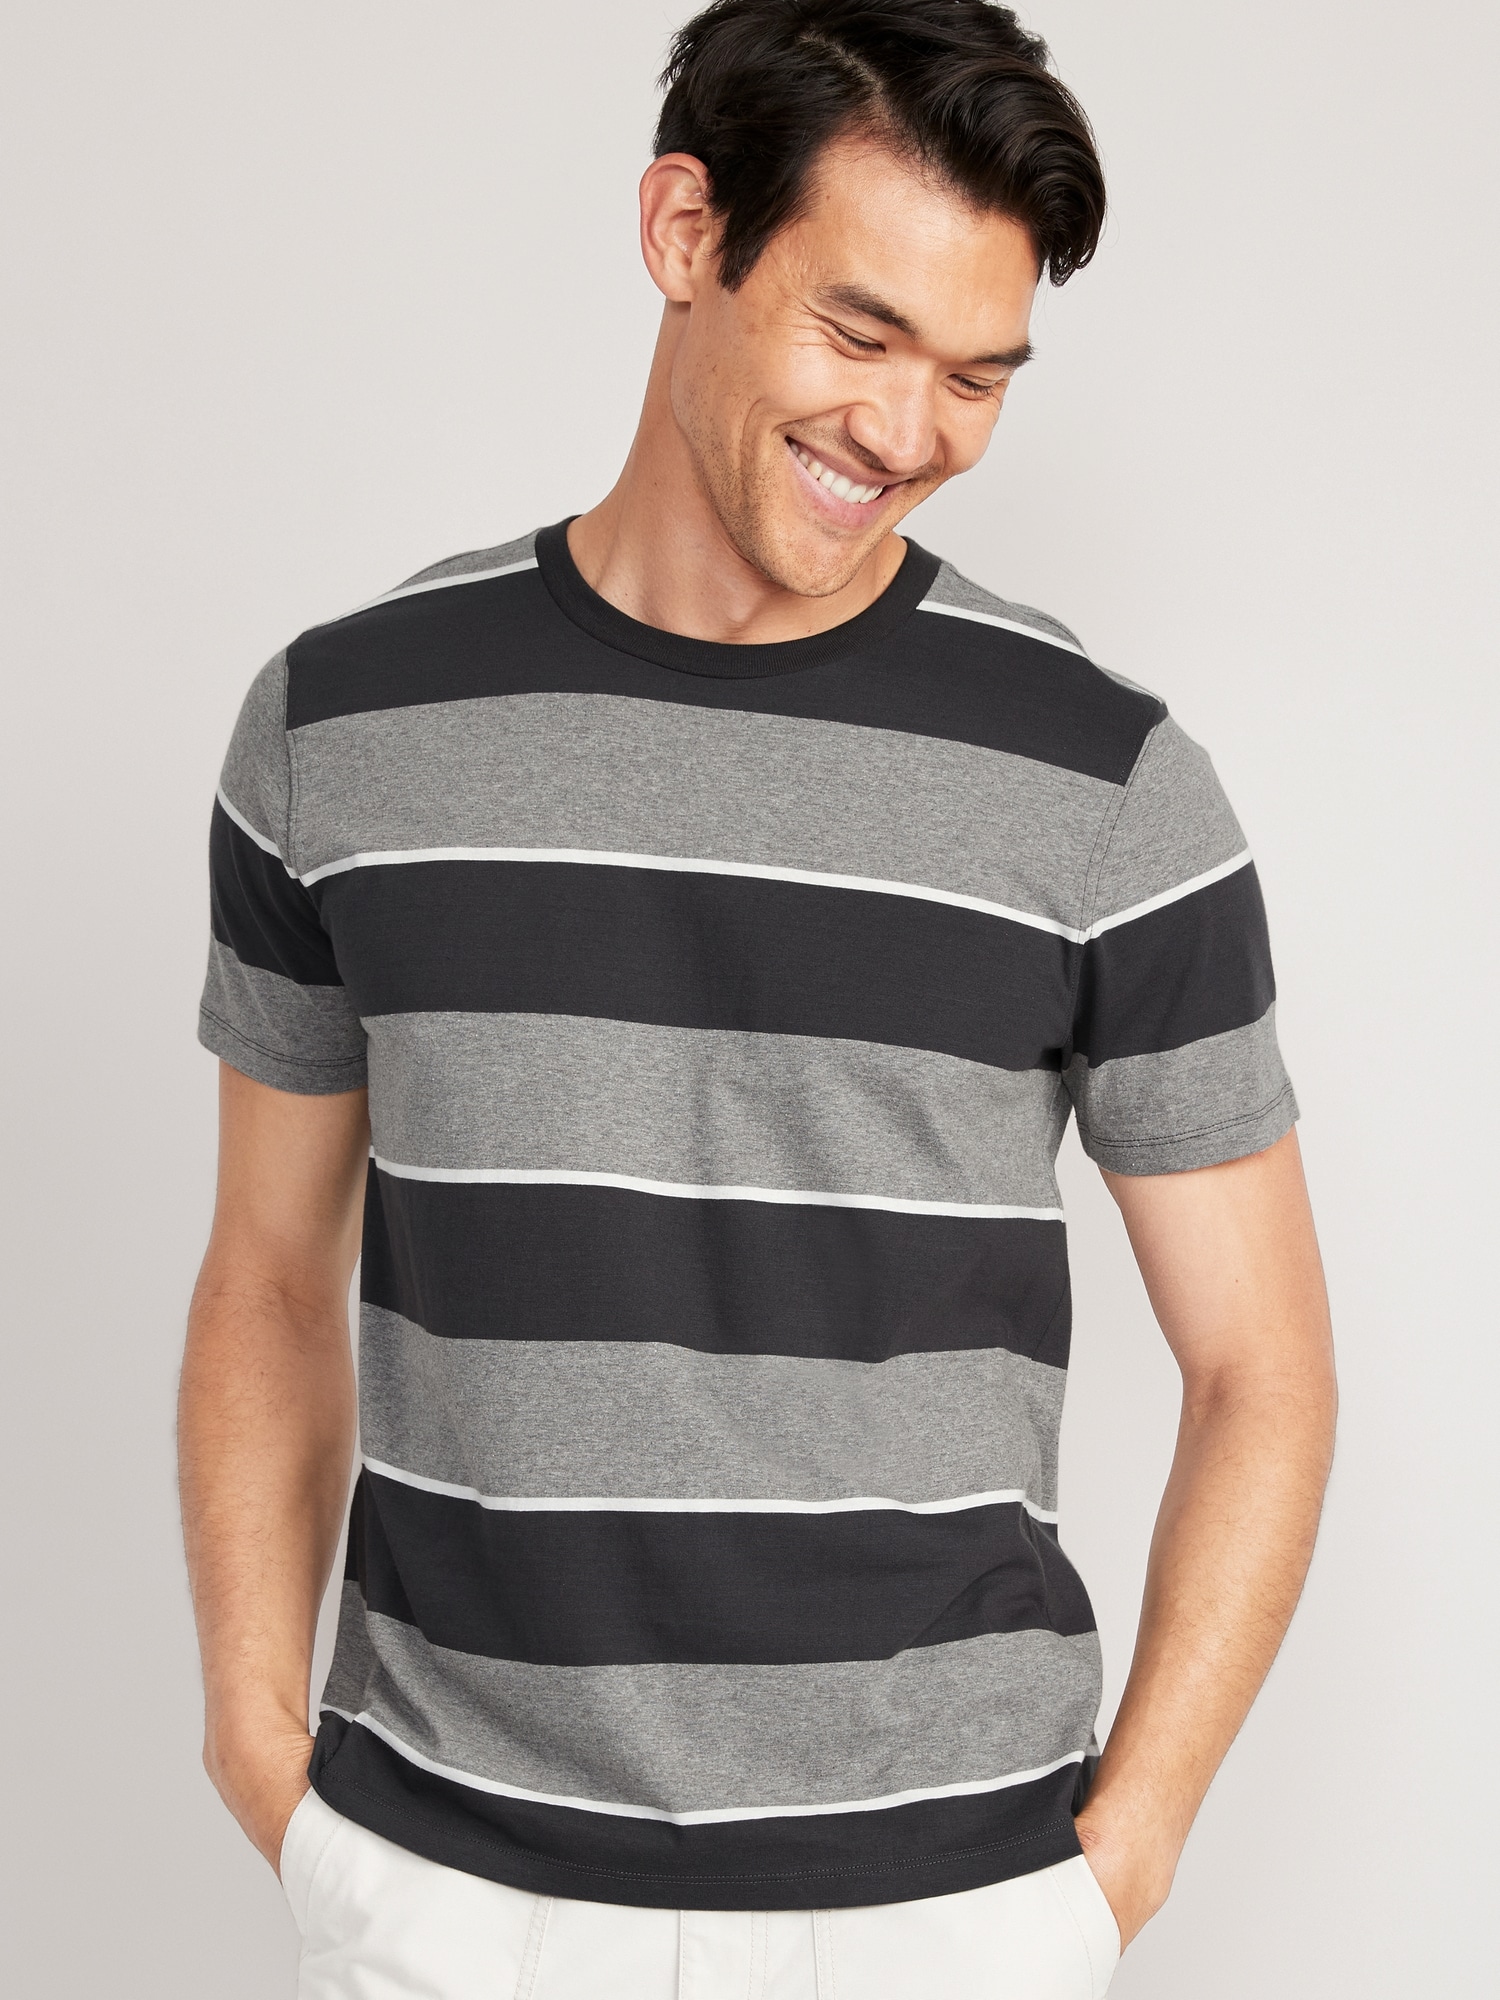 Soft-Washed Striped T-Shirt for Men | Old Navy